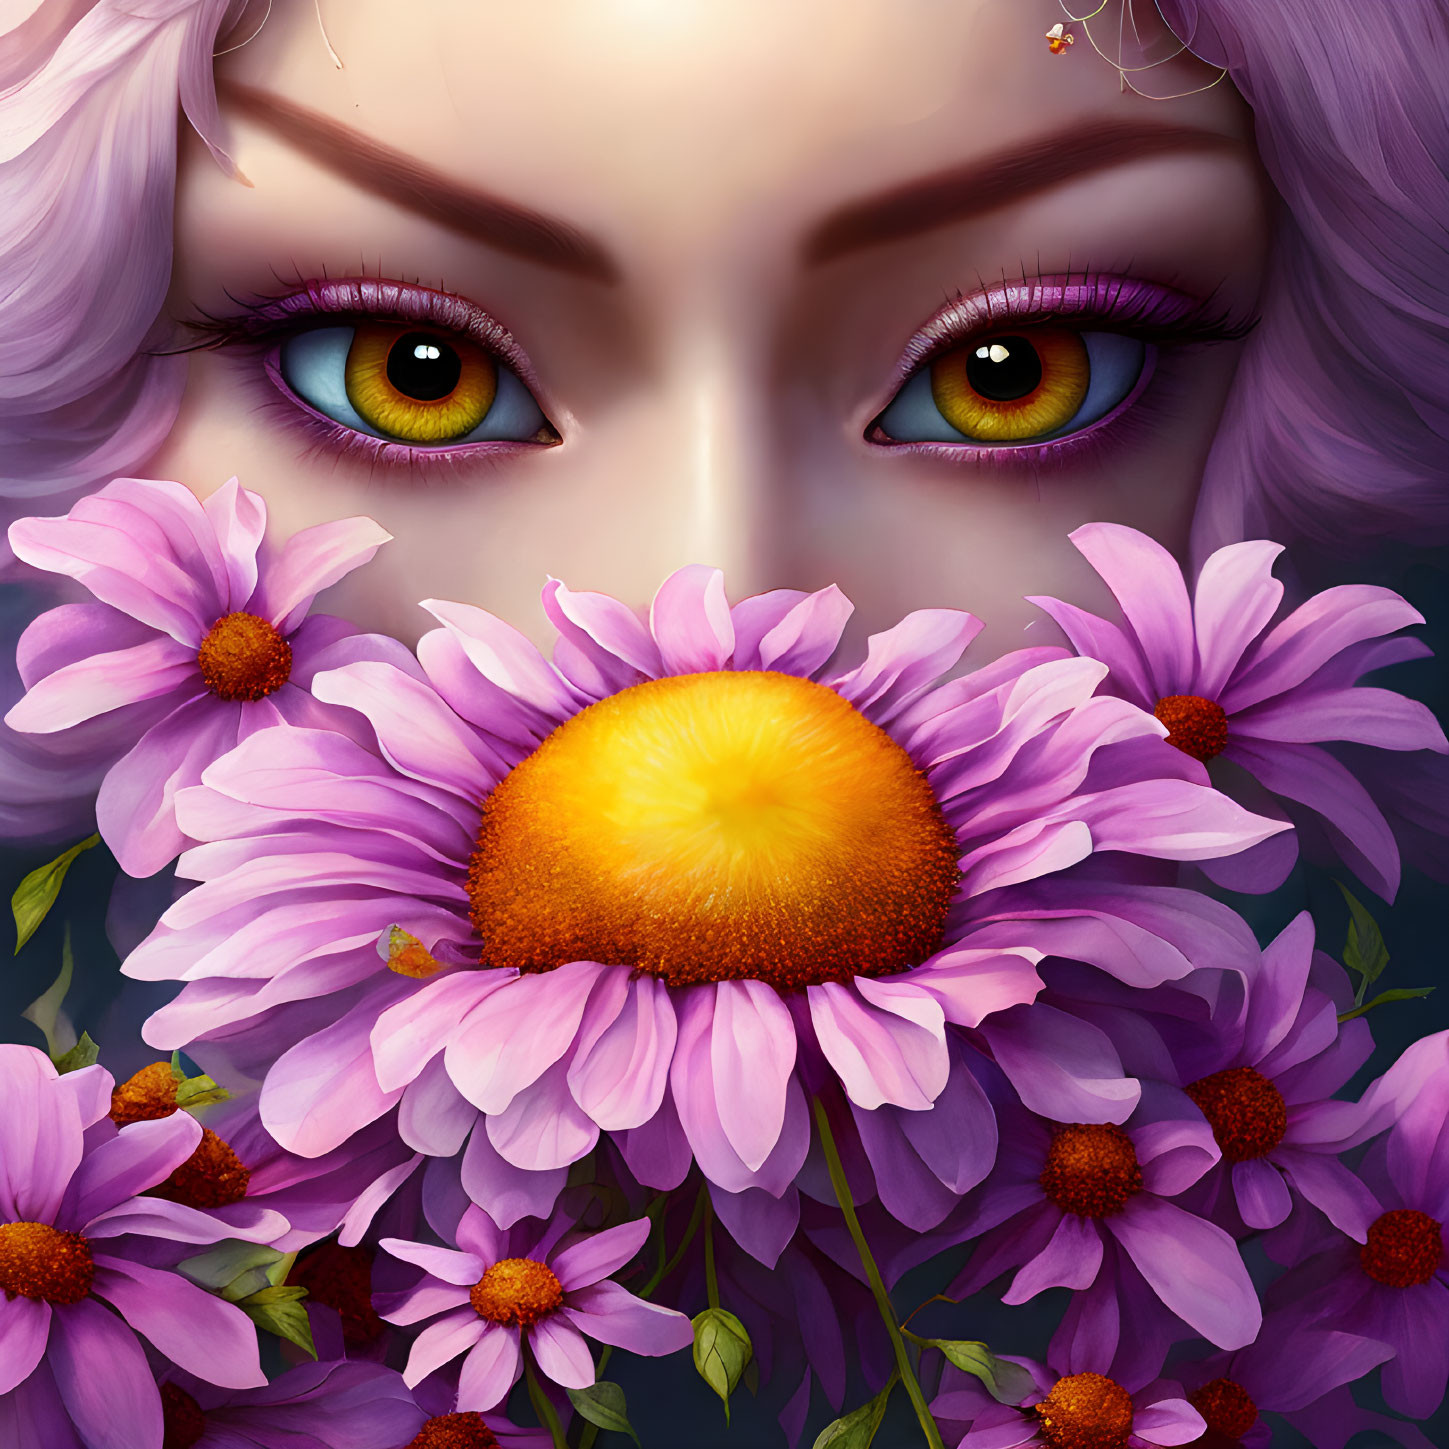 Vibrant purple daisy flowers framing striking green eyes